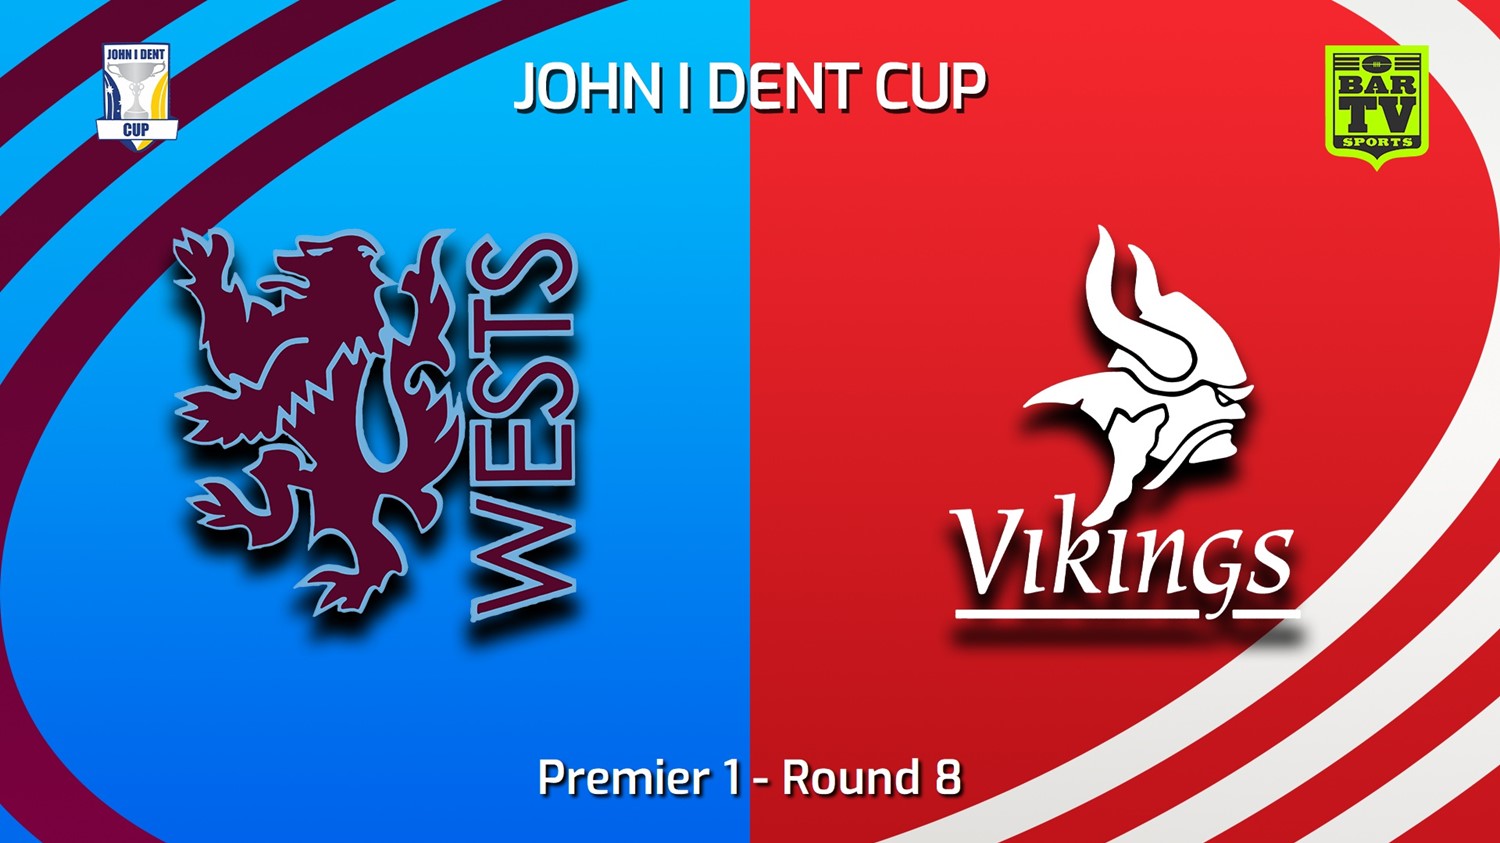 240601-video-John I Dent (ACT) Round 8 - Premier 1 - Wests Lions v Tuggeranong Vikings Minigame Slate Image